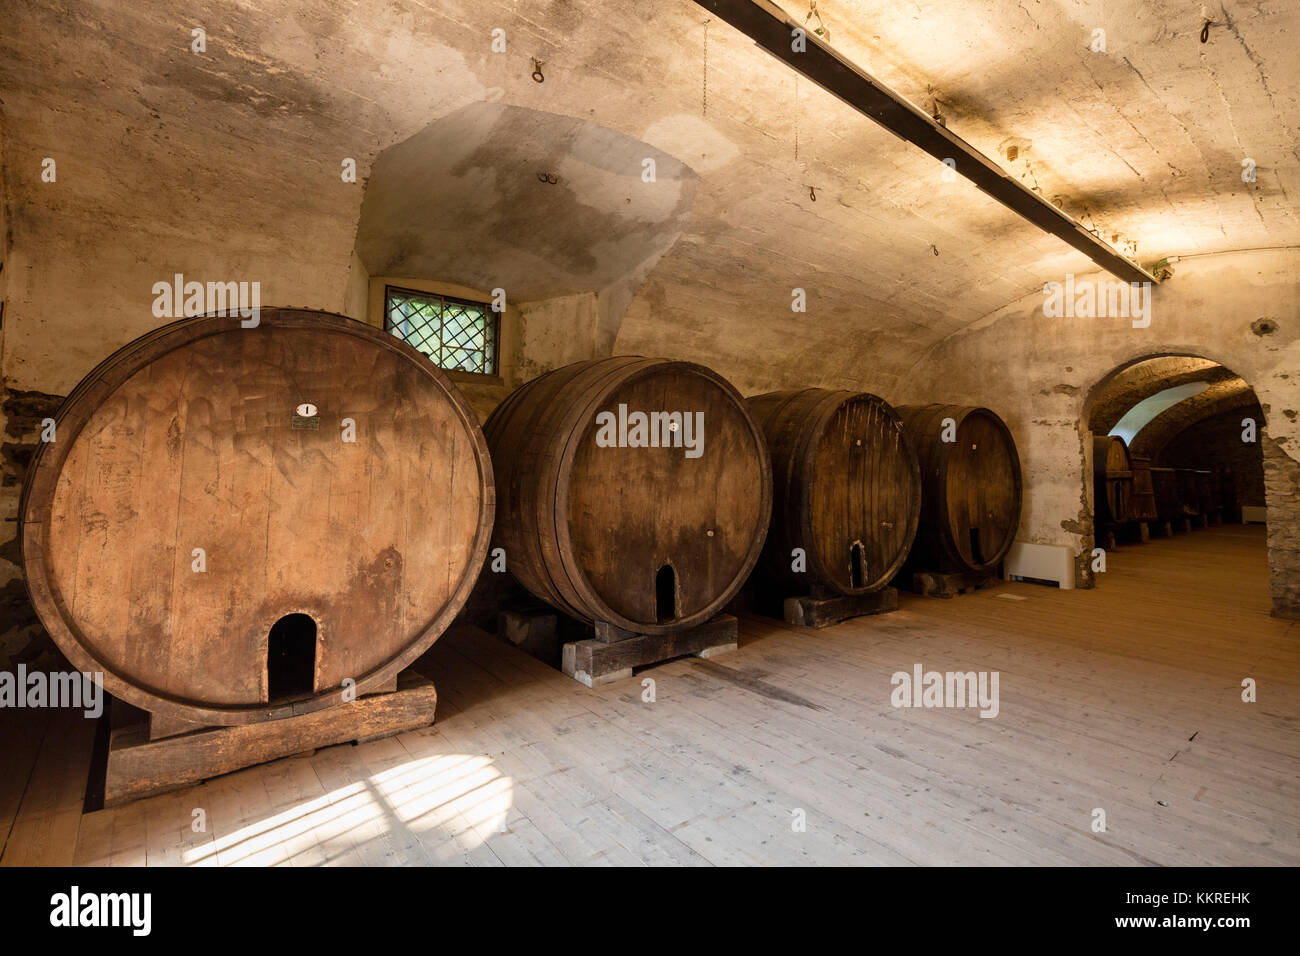 Wood barrels of wine cellar of the monastery of Astino, Longuelo, province of Bergamo, Lombardy, Italy, Europe Stock Photo